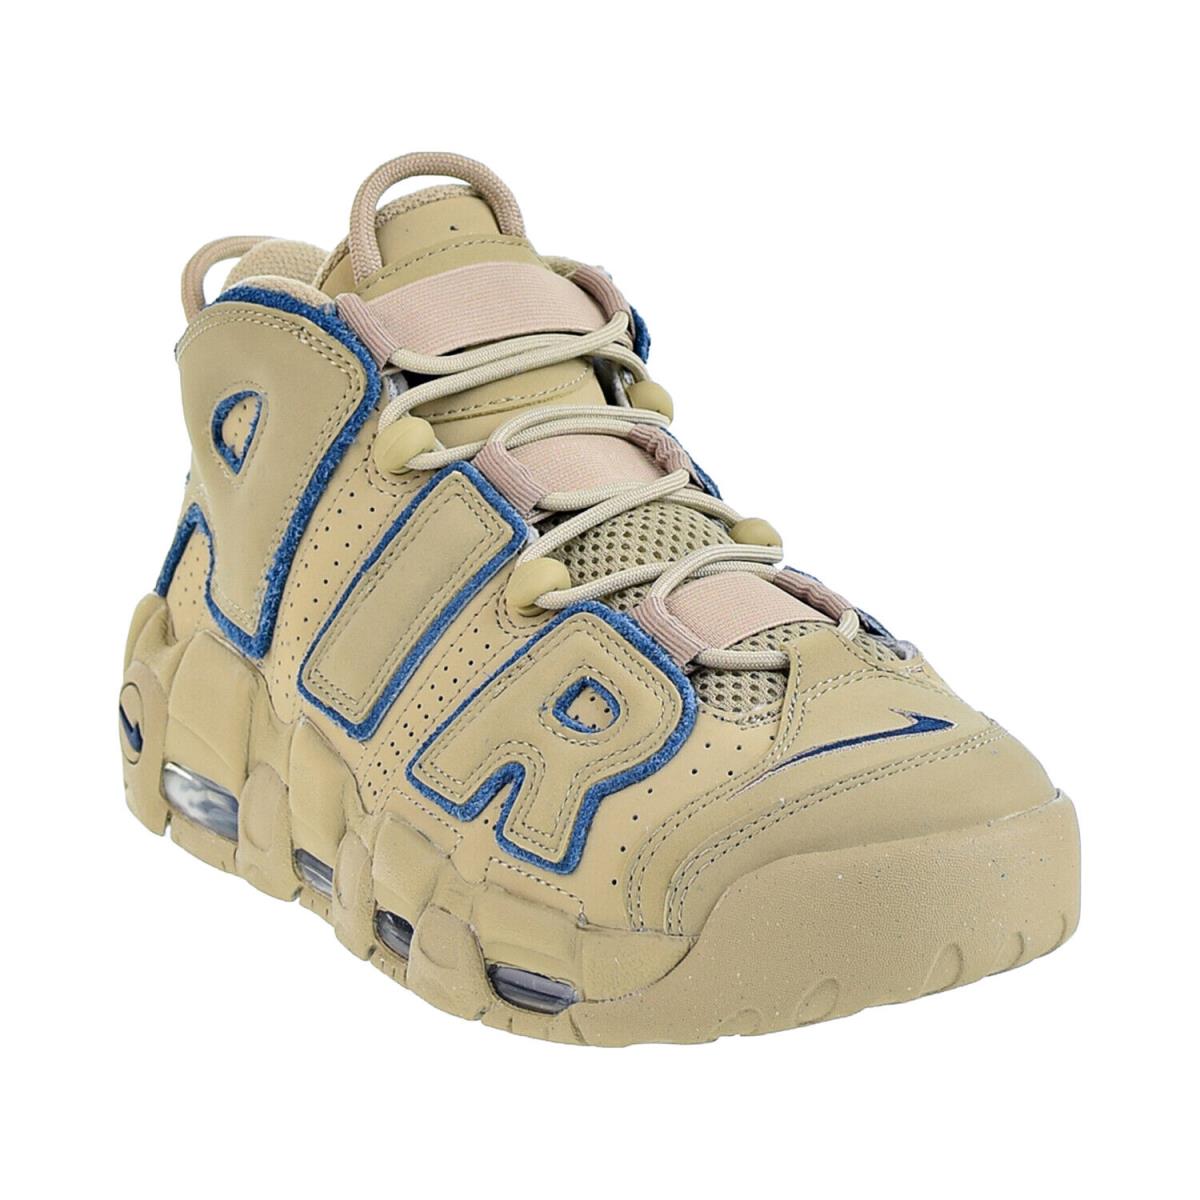 Nike Air More Uptempo Men`s Shoes Limestone-valerian Blue DV6993-200 - Limestone-Valerian Blue